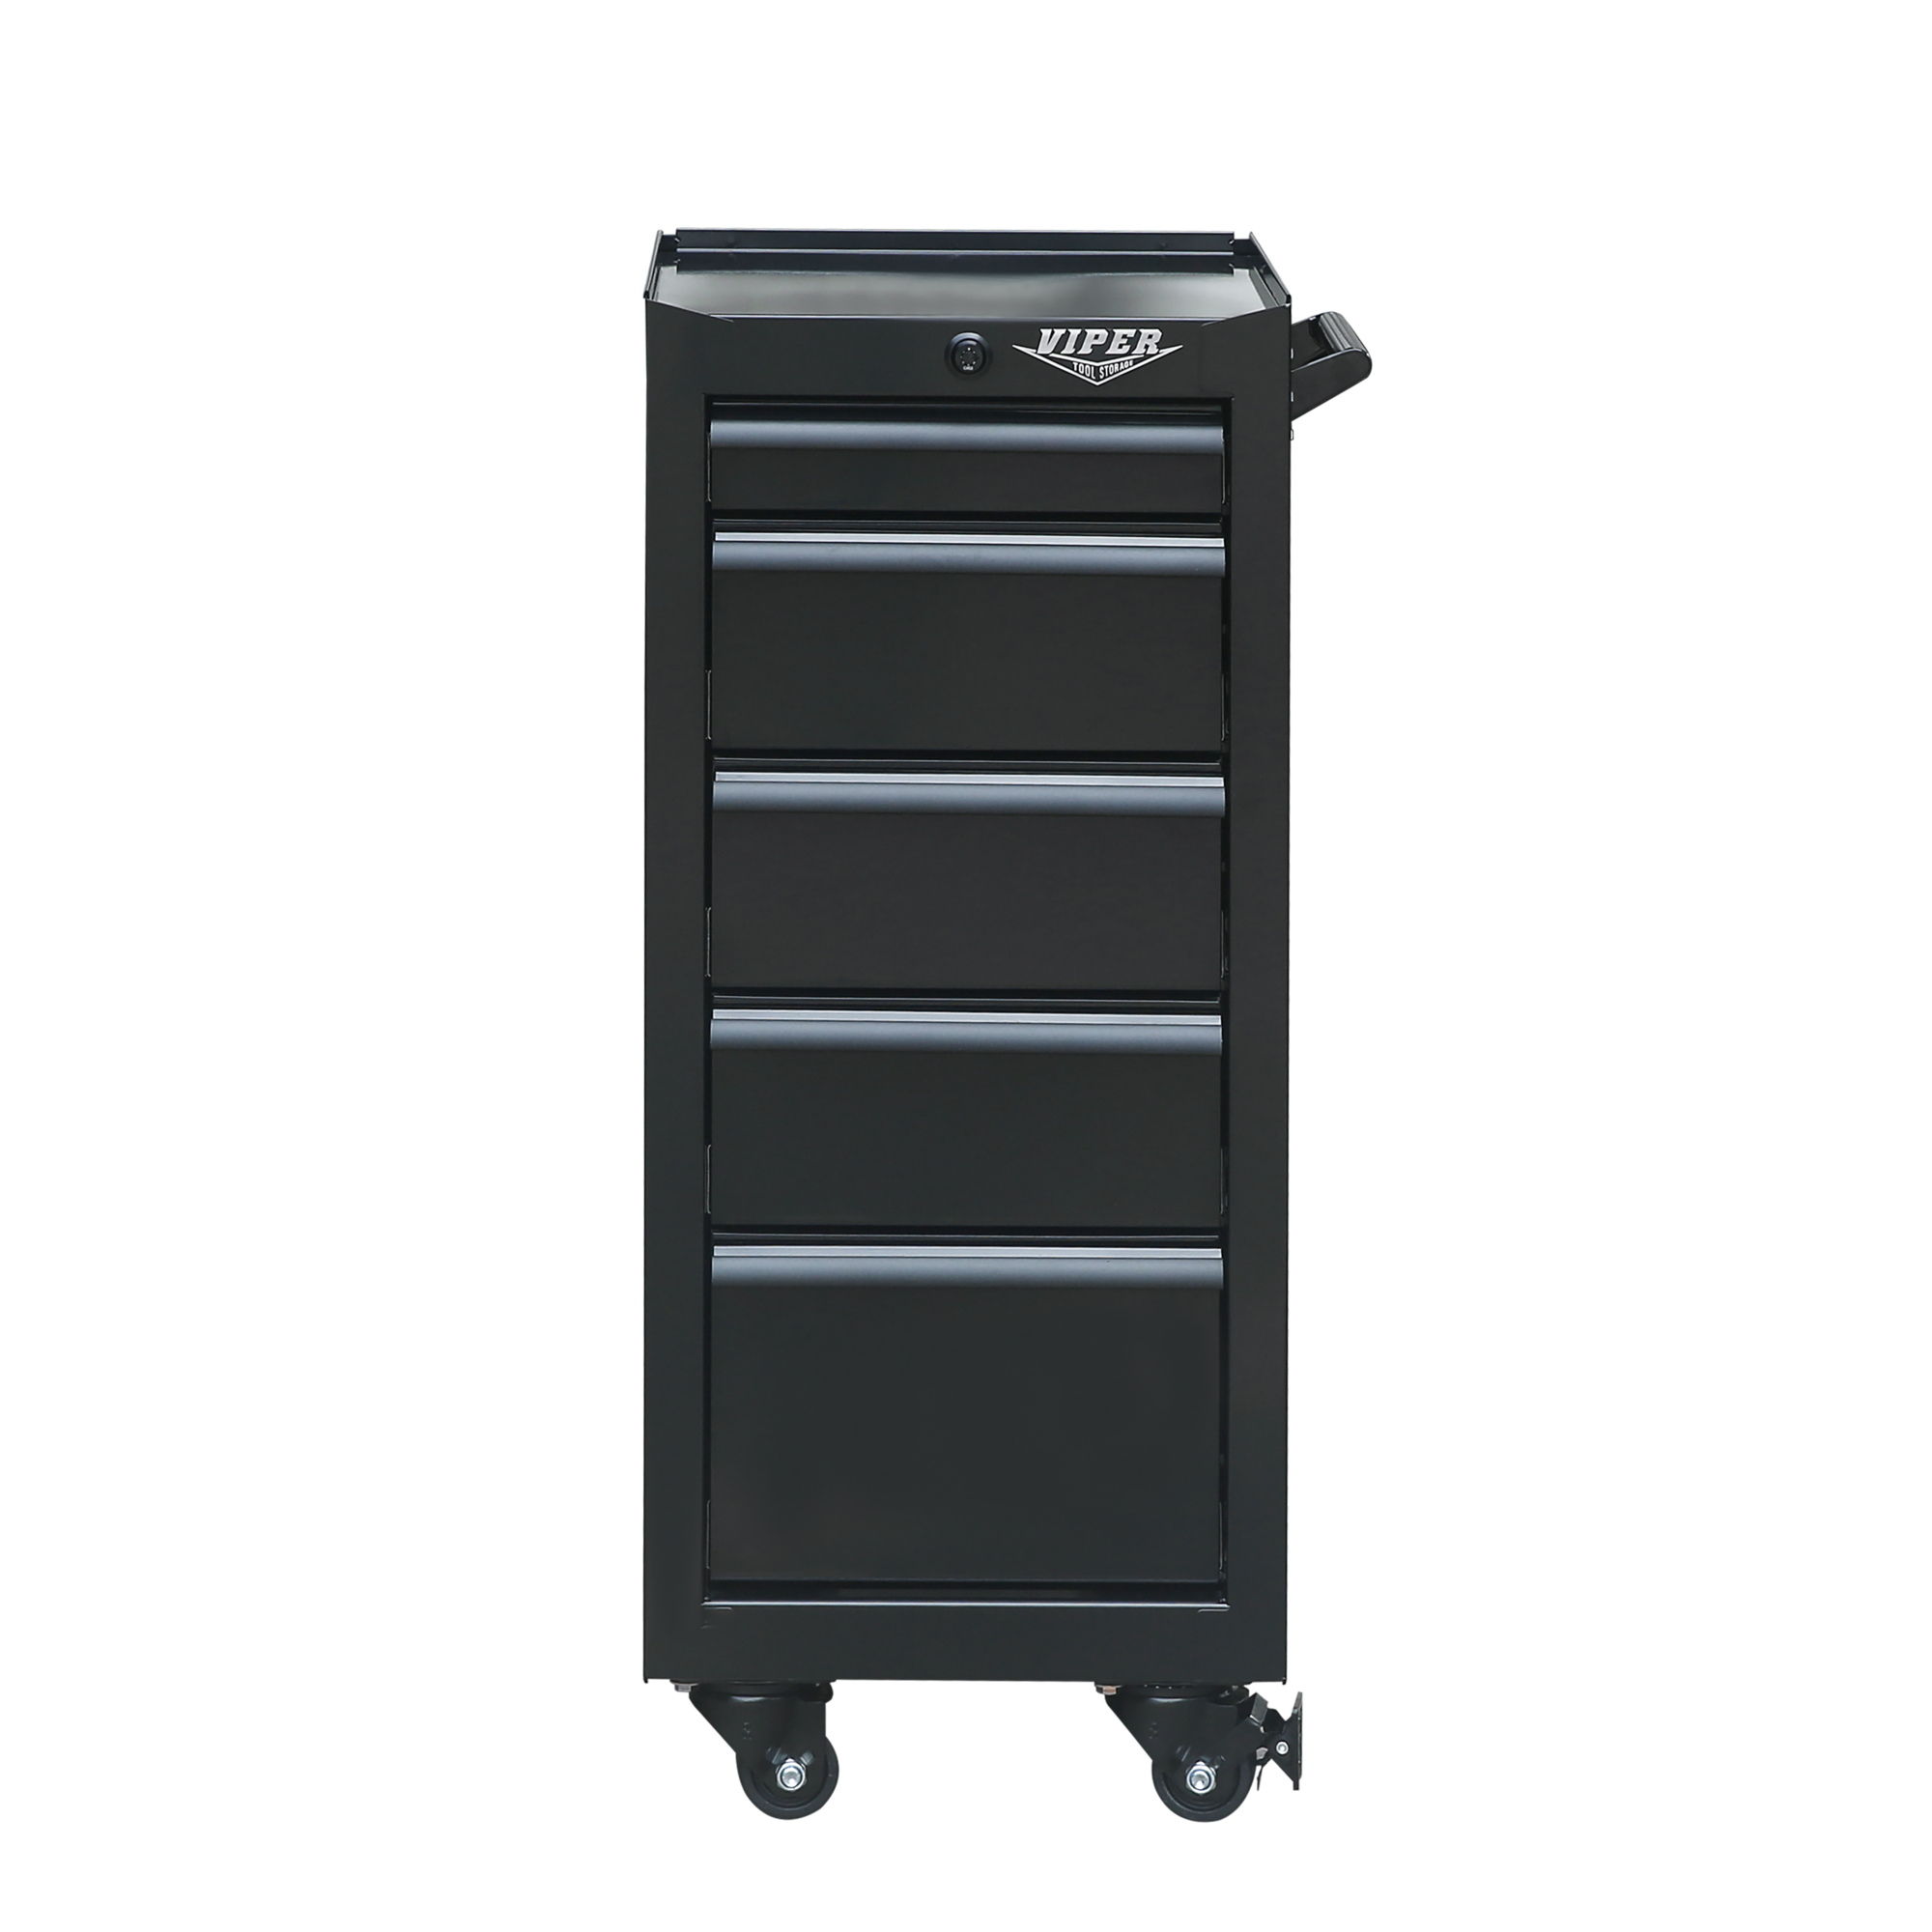 Viper Tool Storage, 5-Drawer 18G Steel Rolling Cart, Black, Width 15.8 in, Height 37.3 in, Color Black, Model V1605BLR